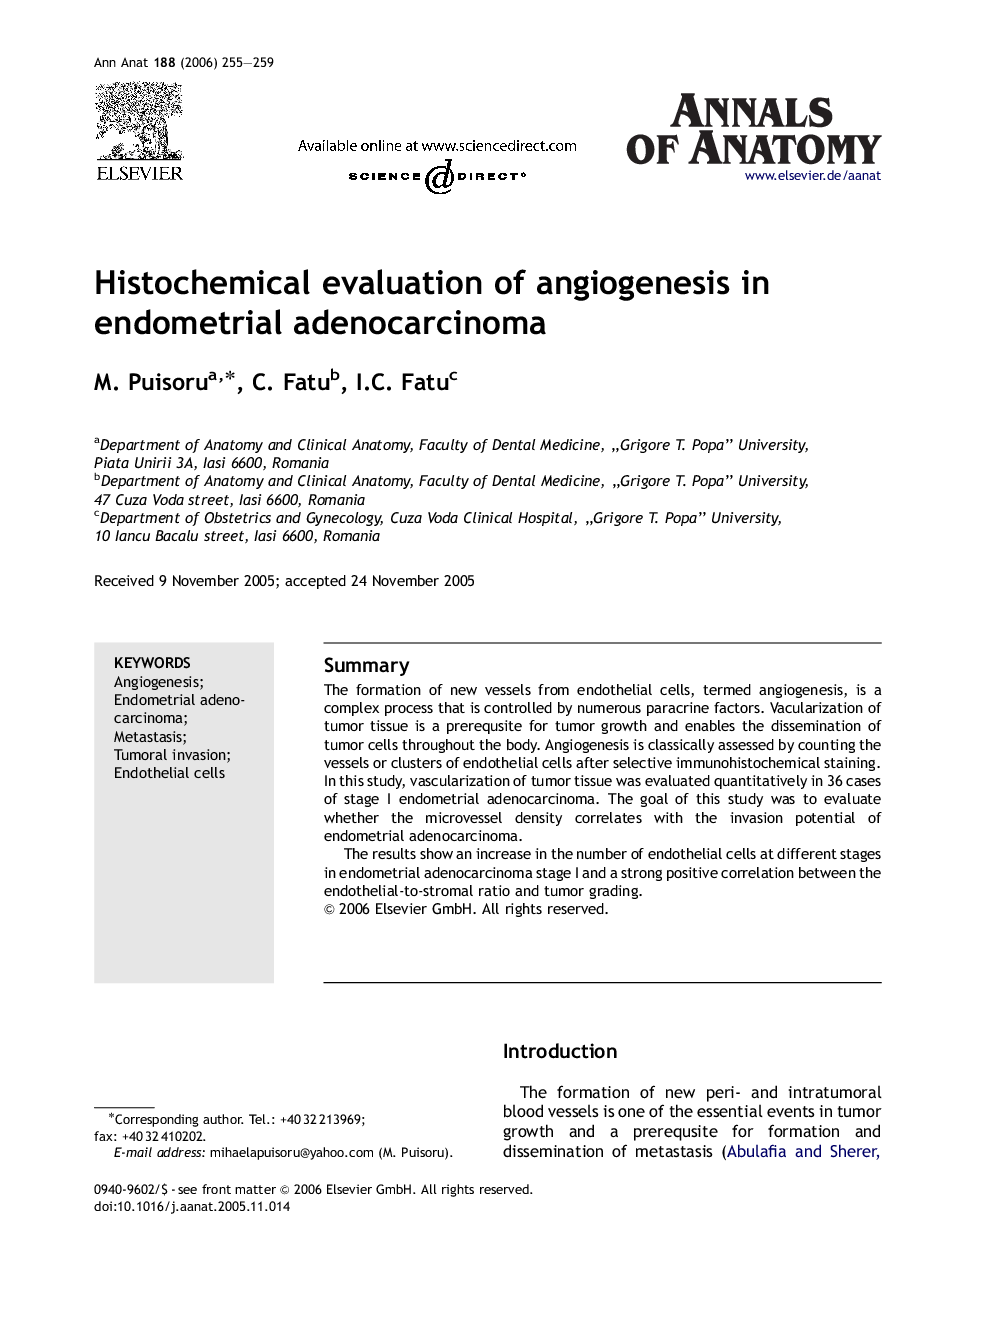 Histochemical evaluation of angiogenesis in endometrial adenocarcinoma